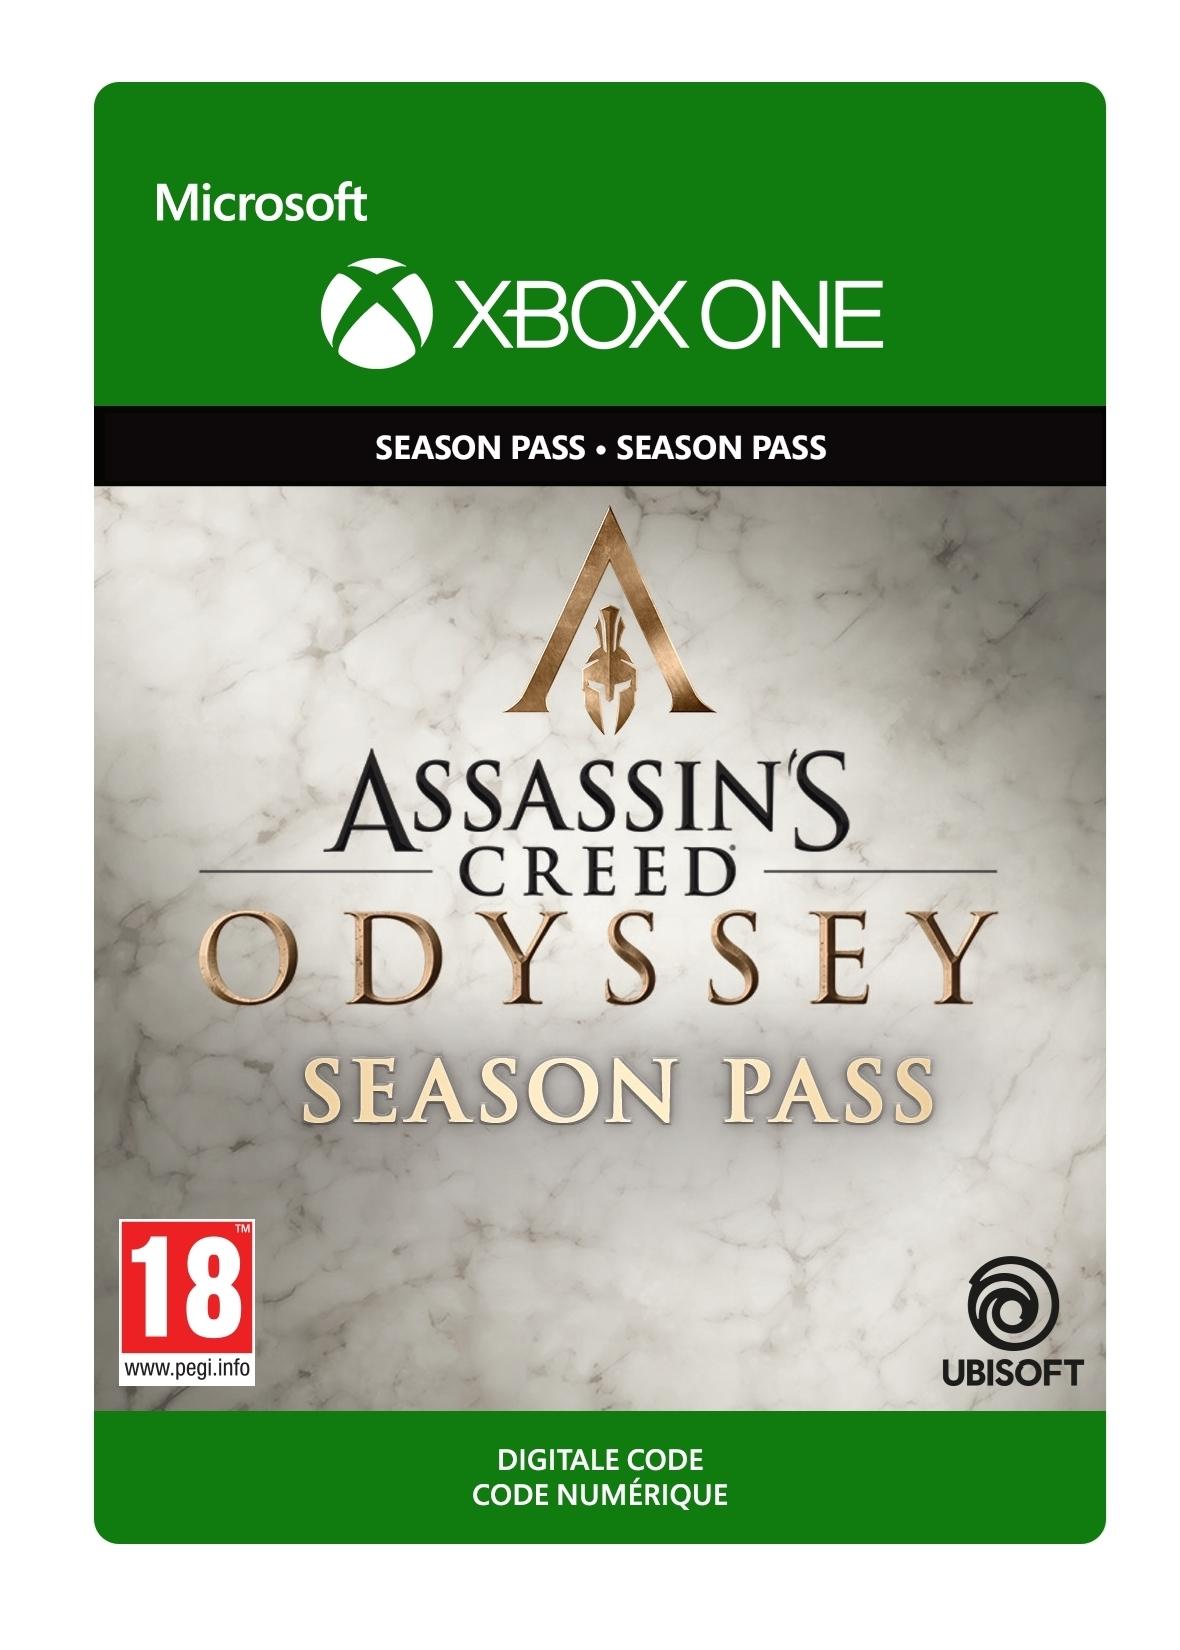 Assassin's Creed Odyssey: Season Pass - Xbox One - Season Pass | 7D4-00326 (ae623213-8927-7d40-8cc8-d8c71da55760)